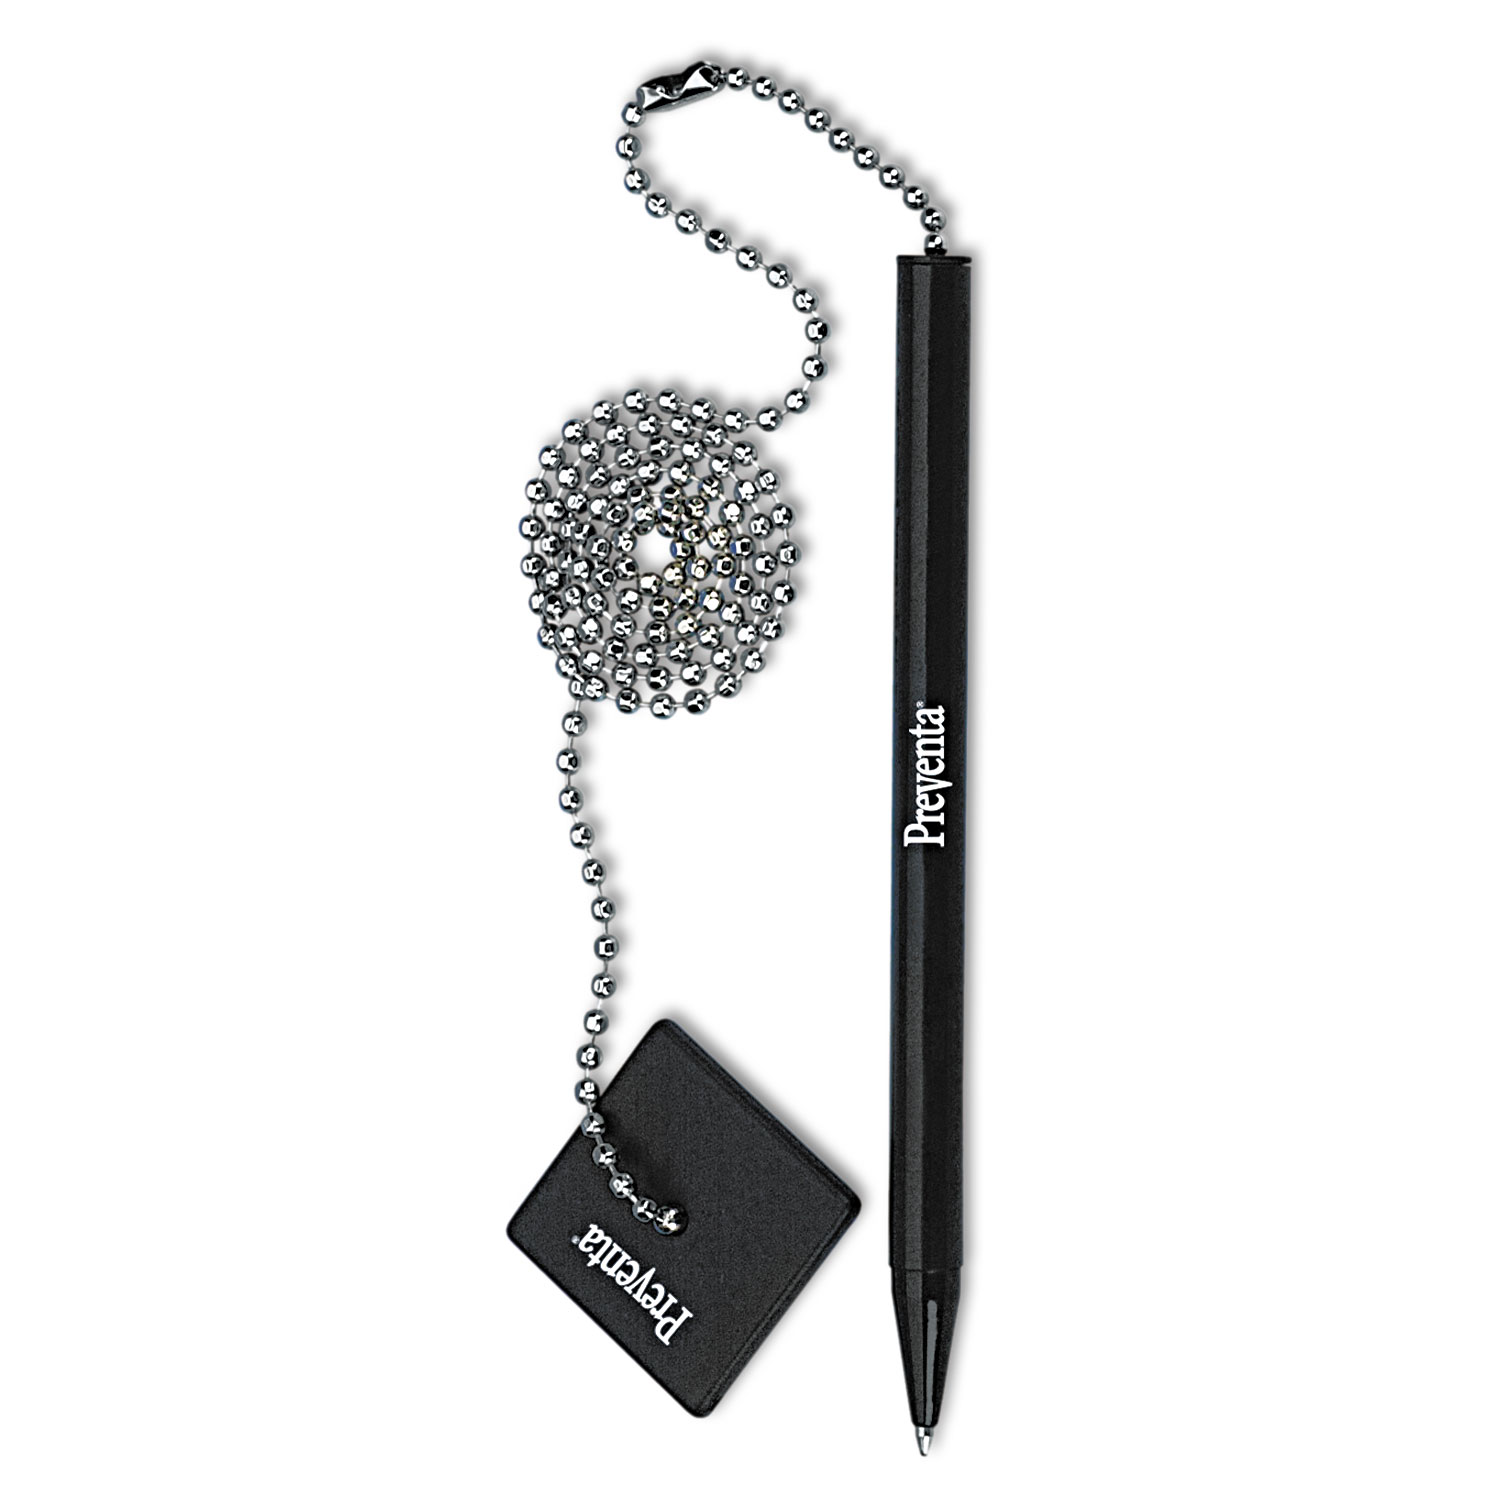  Iconex 5057 Preventa Stick Ballpoint Counter Pen, Medium 1mm, Black Ink, Black Barrel (ICX94190038) 